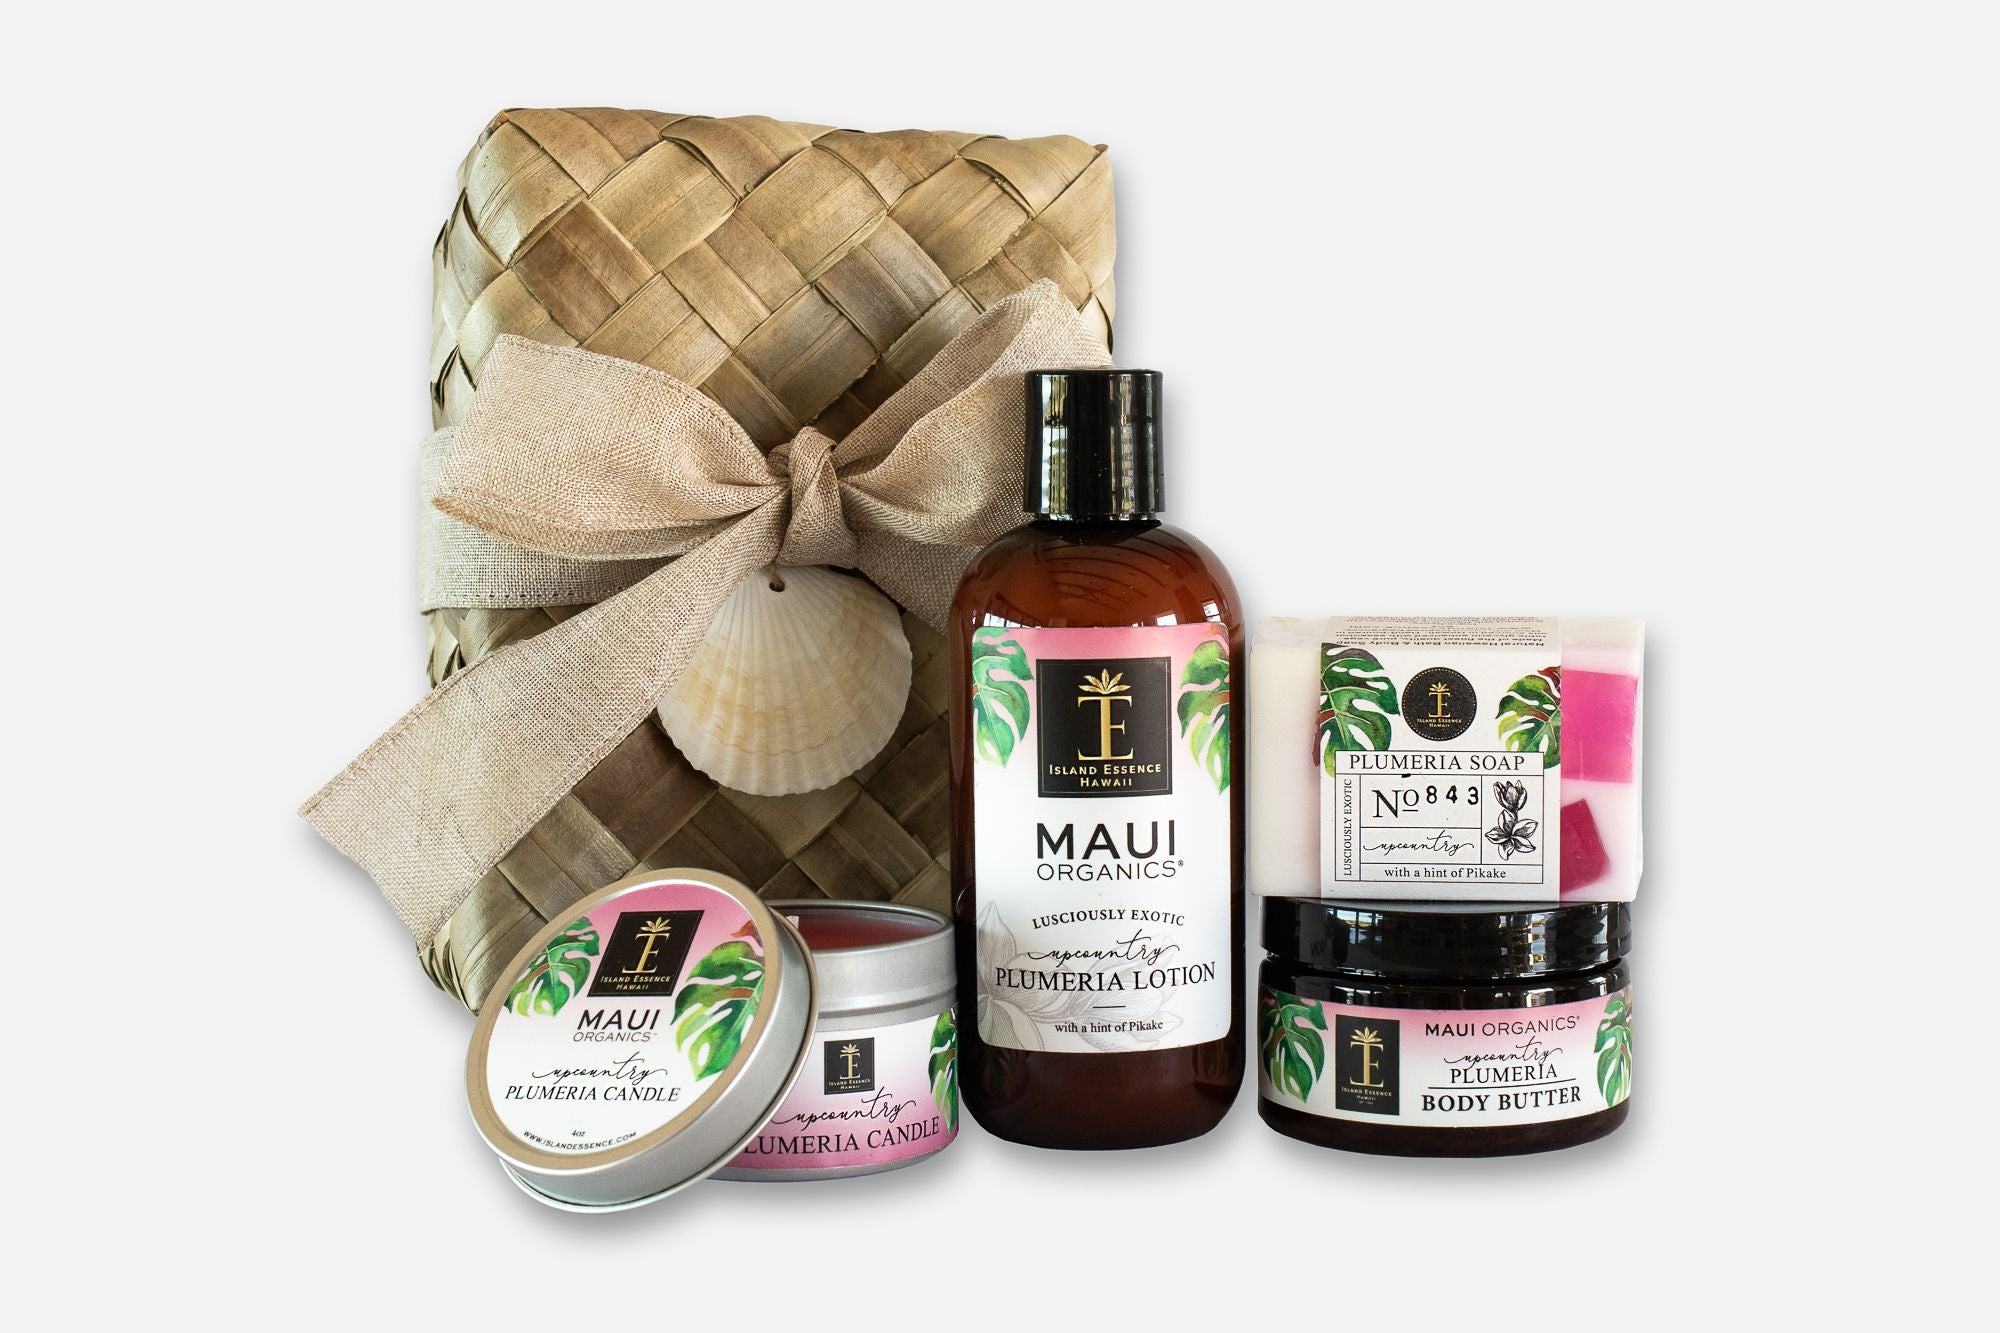 Maui Organics Lauhala Gift Collection - Upcountry Plumeria